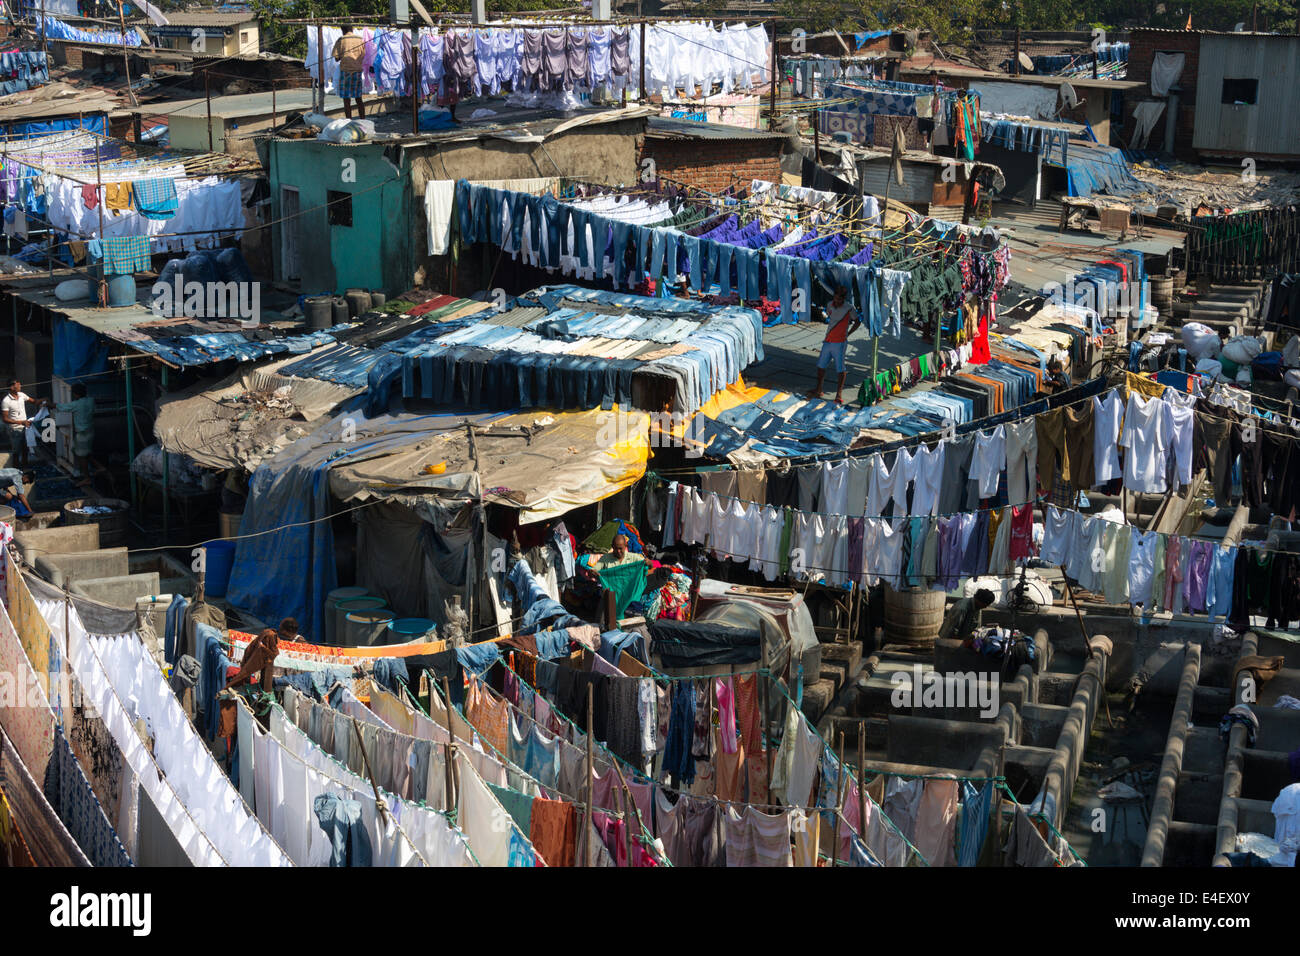 Clean laundry drying up in Mahalaxmi Dhobi ghat, large open air laundry in Mumbai, India. Stock Photo